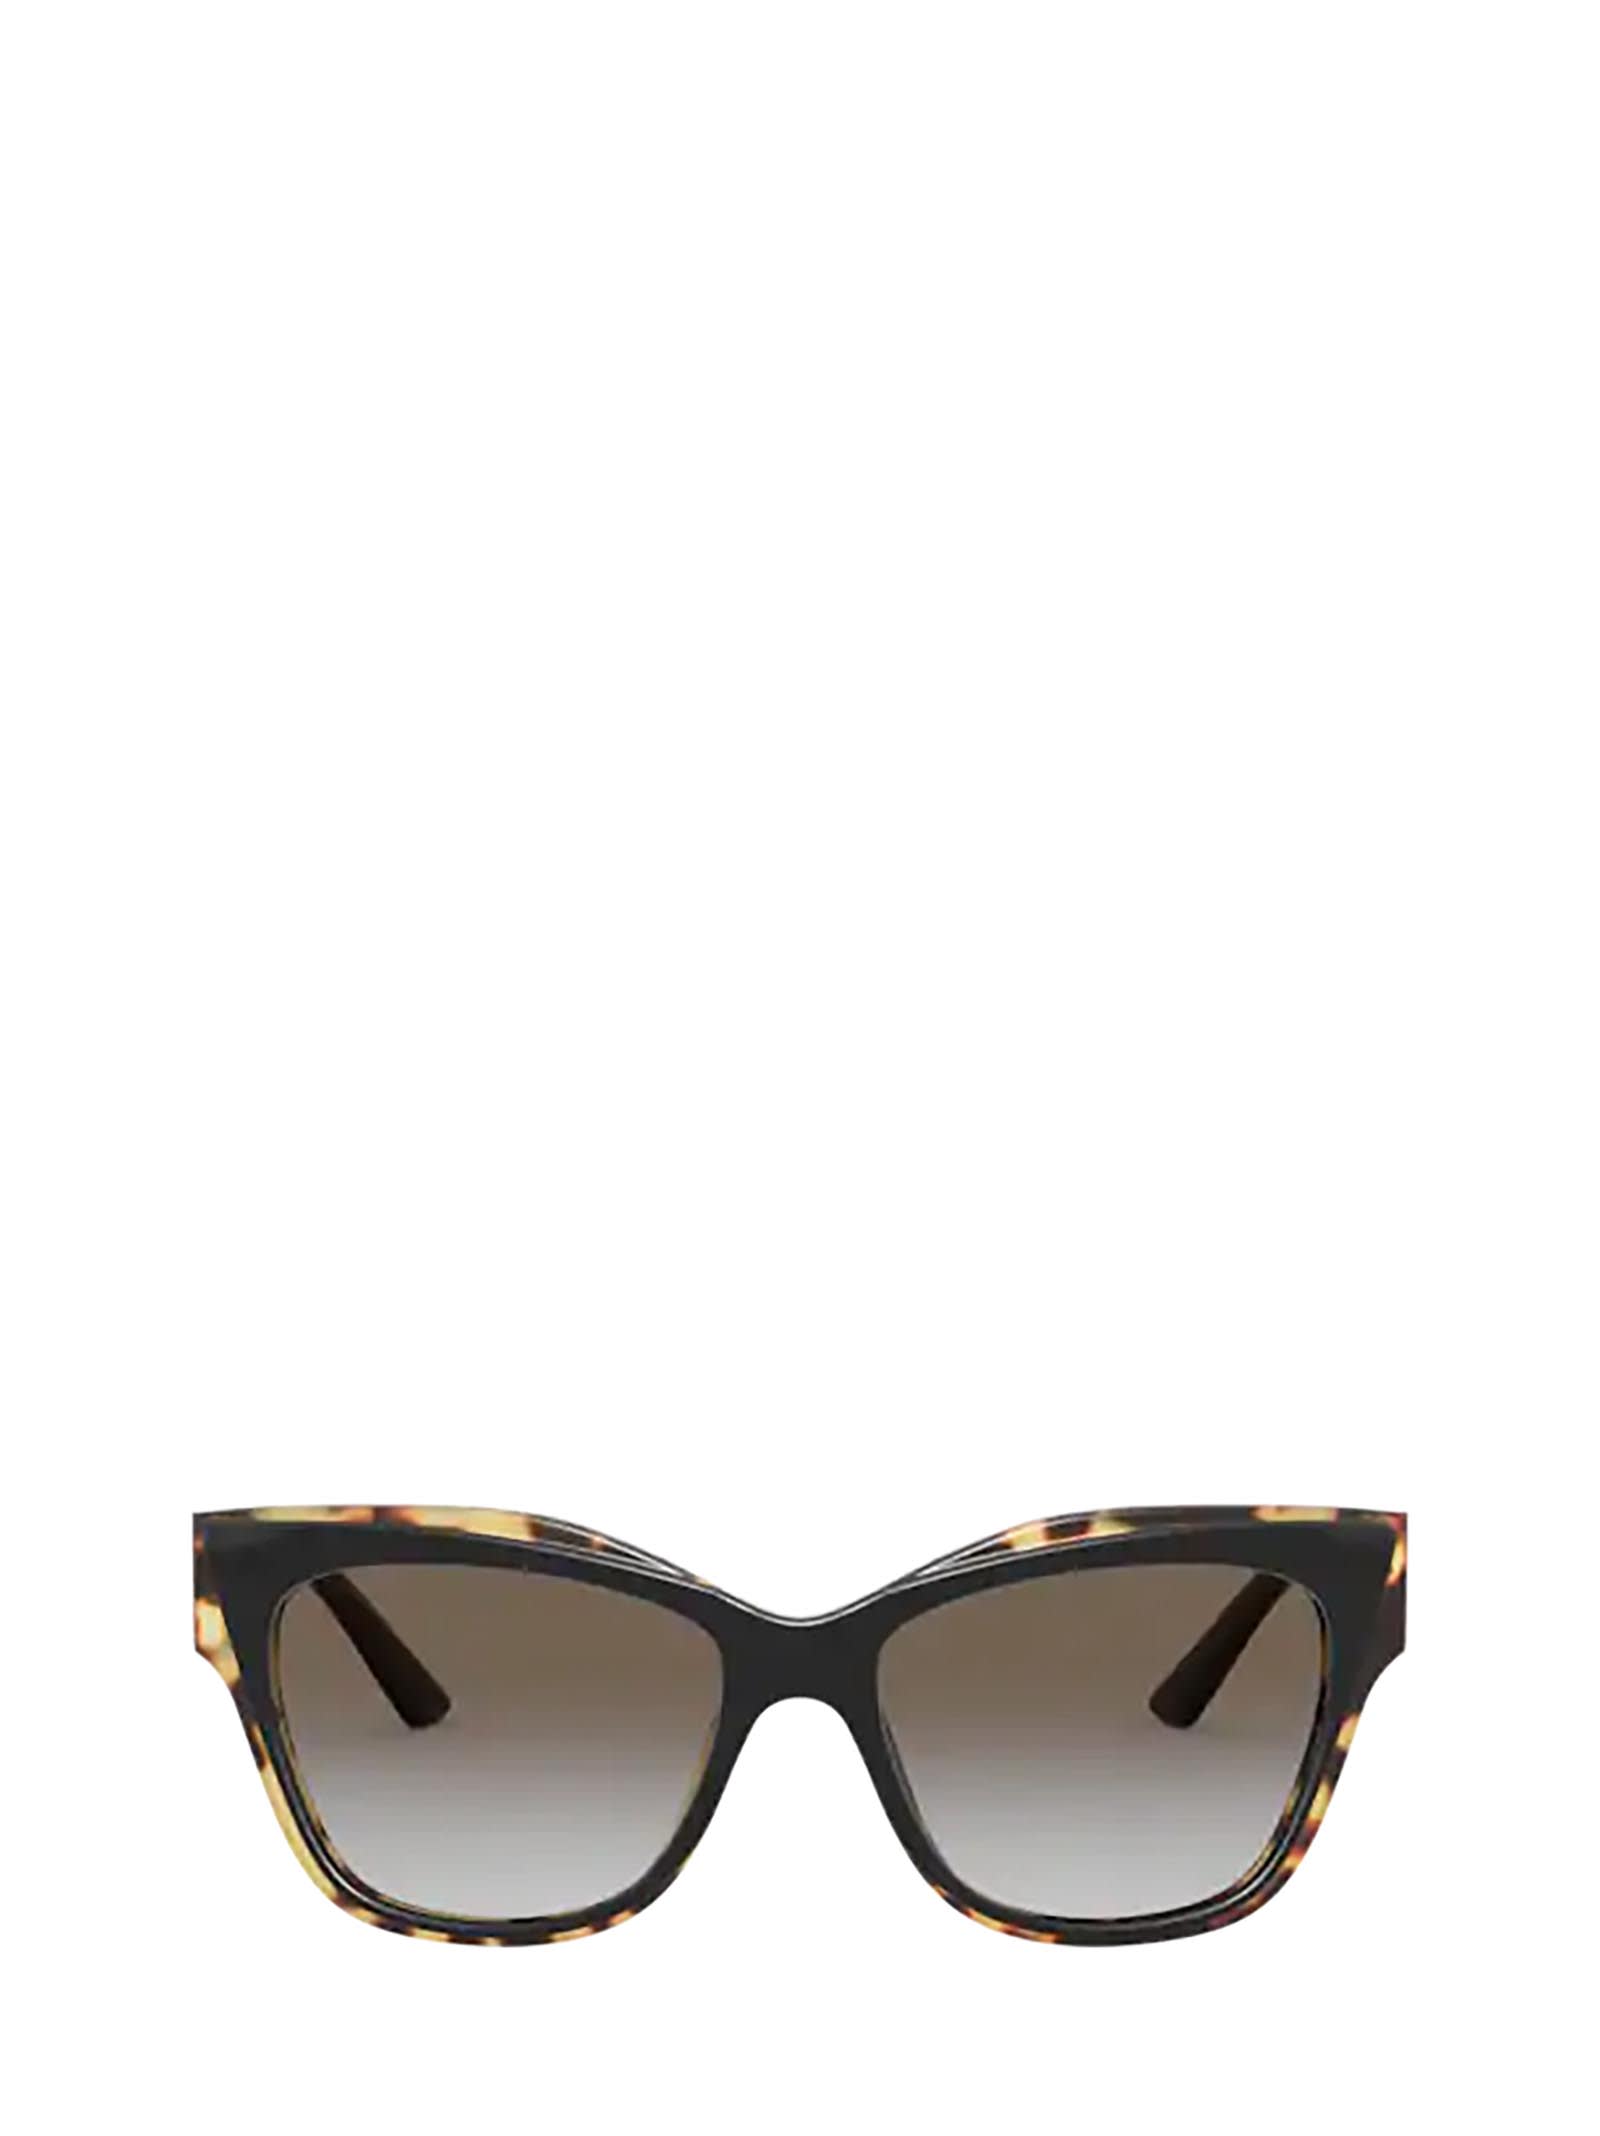 Prada Eyewear Prada Pr 23xs Black / Havana Media Sunglasses